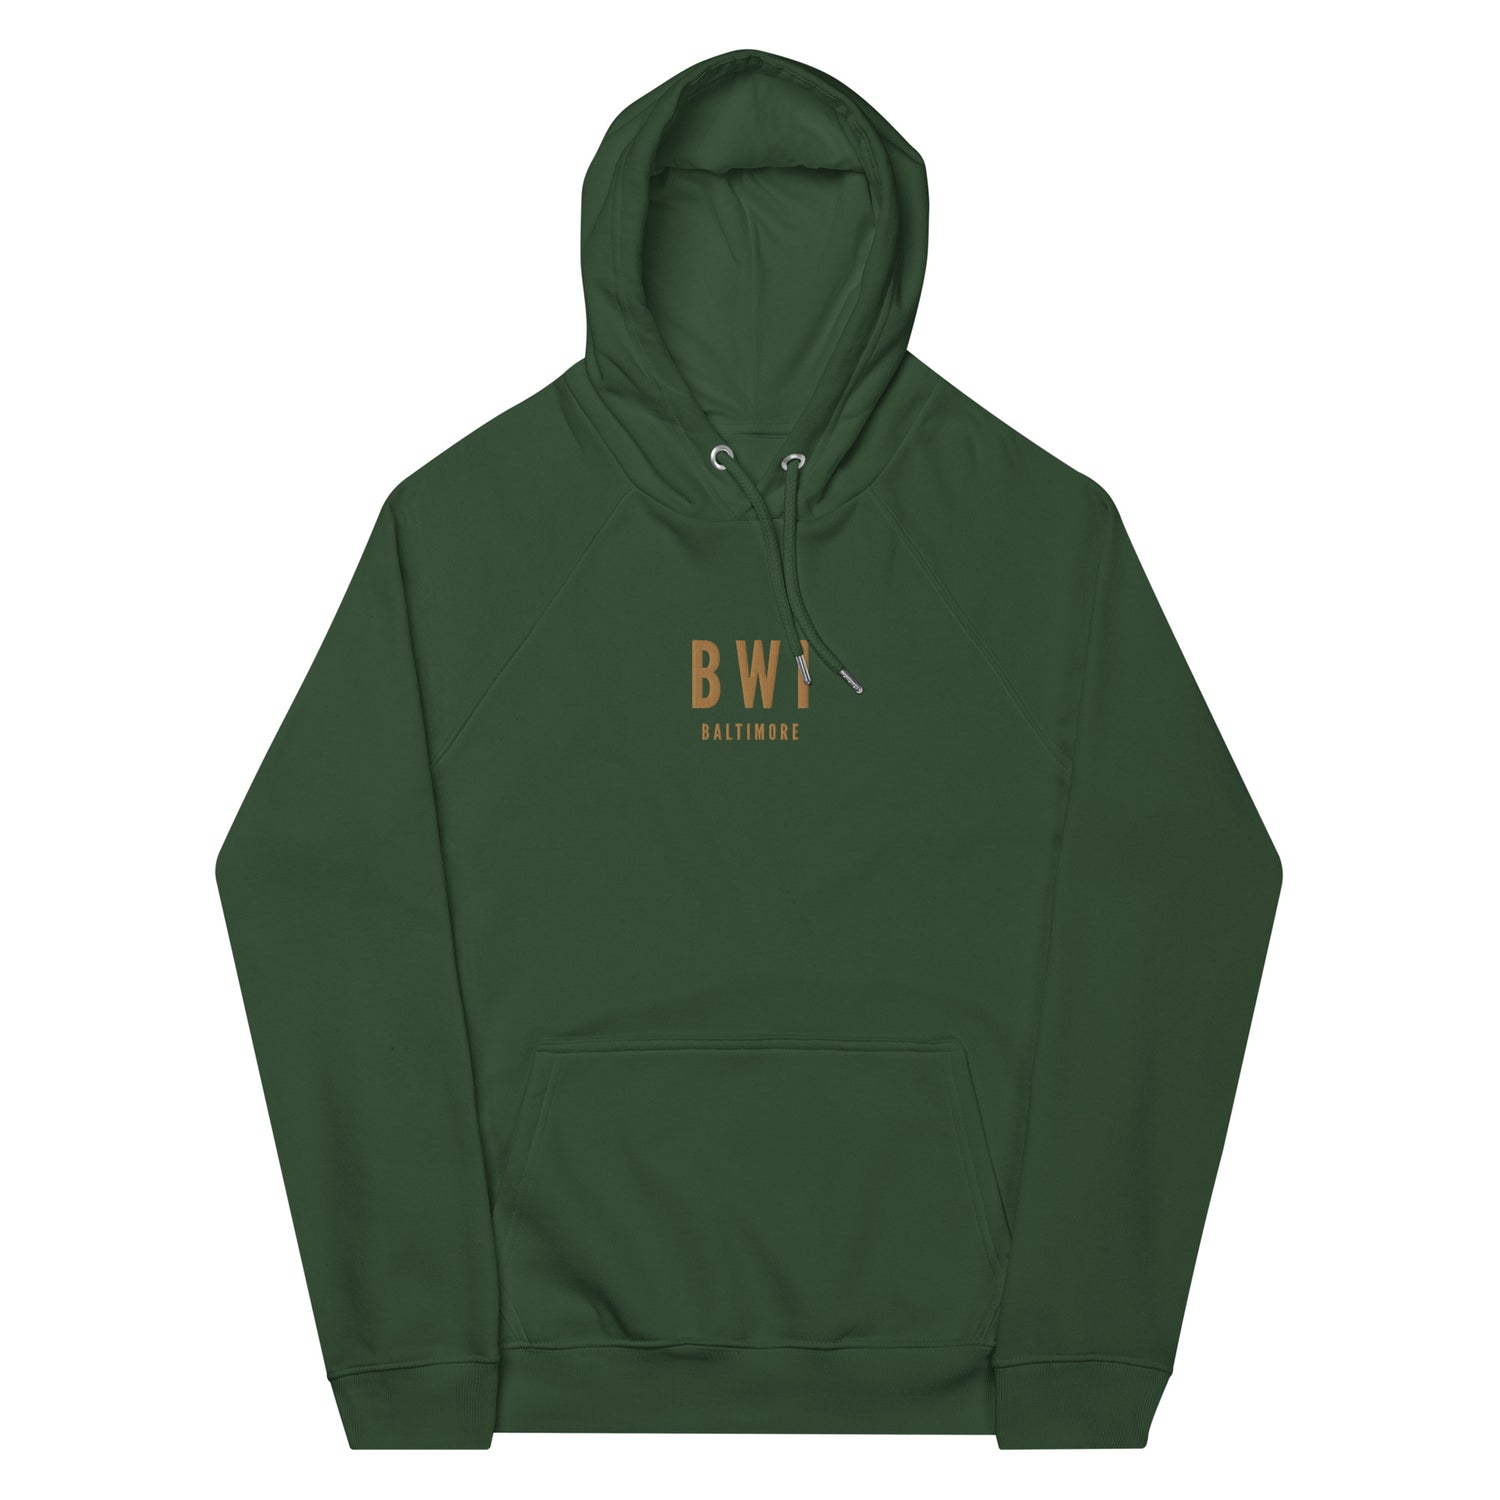 Baltimore Maryland Hoodies and Sweatshirts • BWI Airport Code